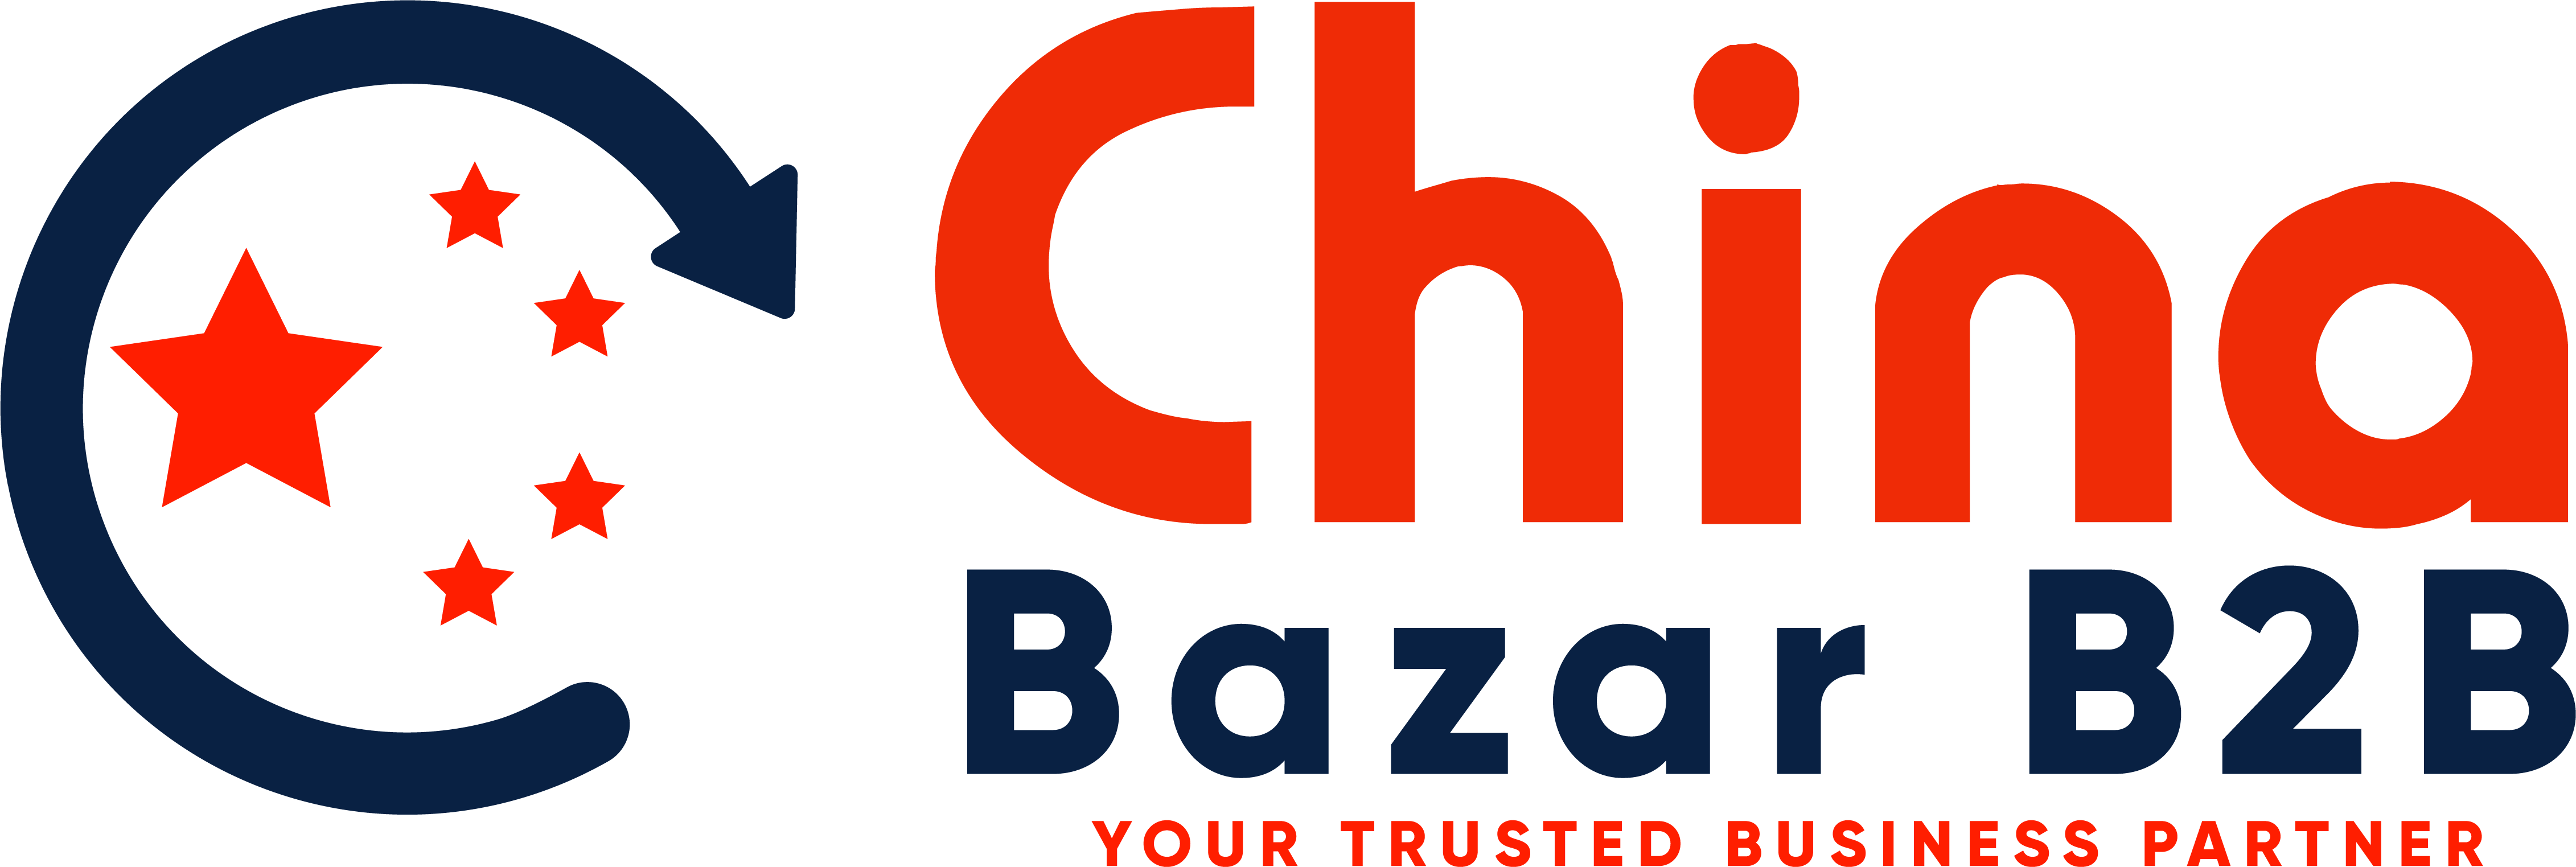 China Bazar Blog